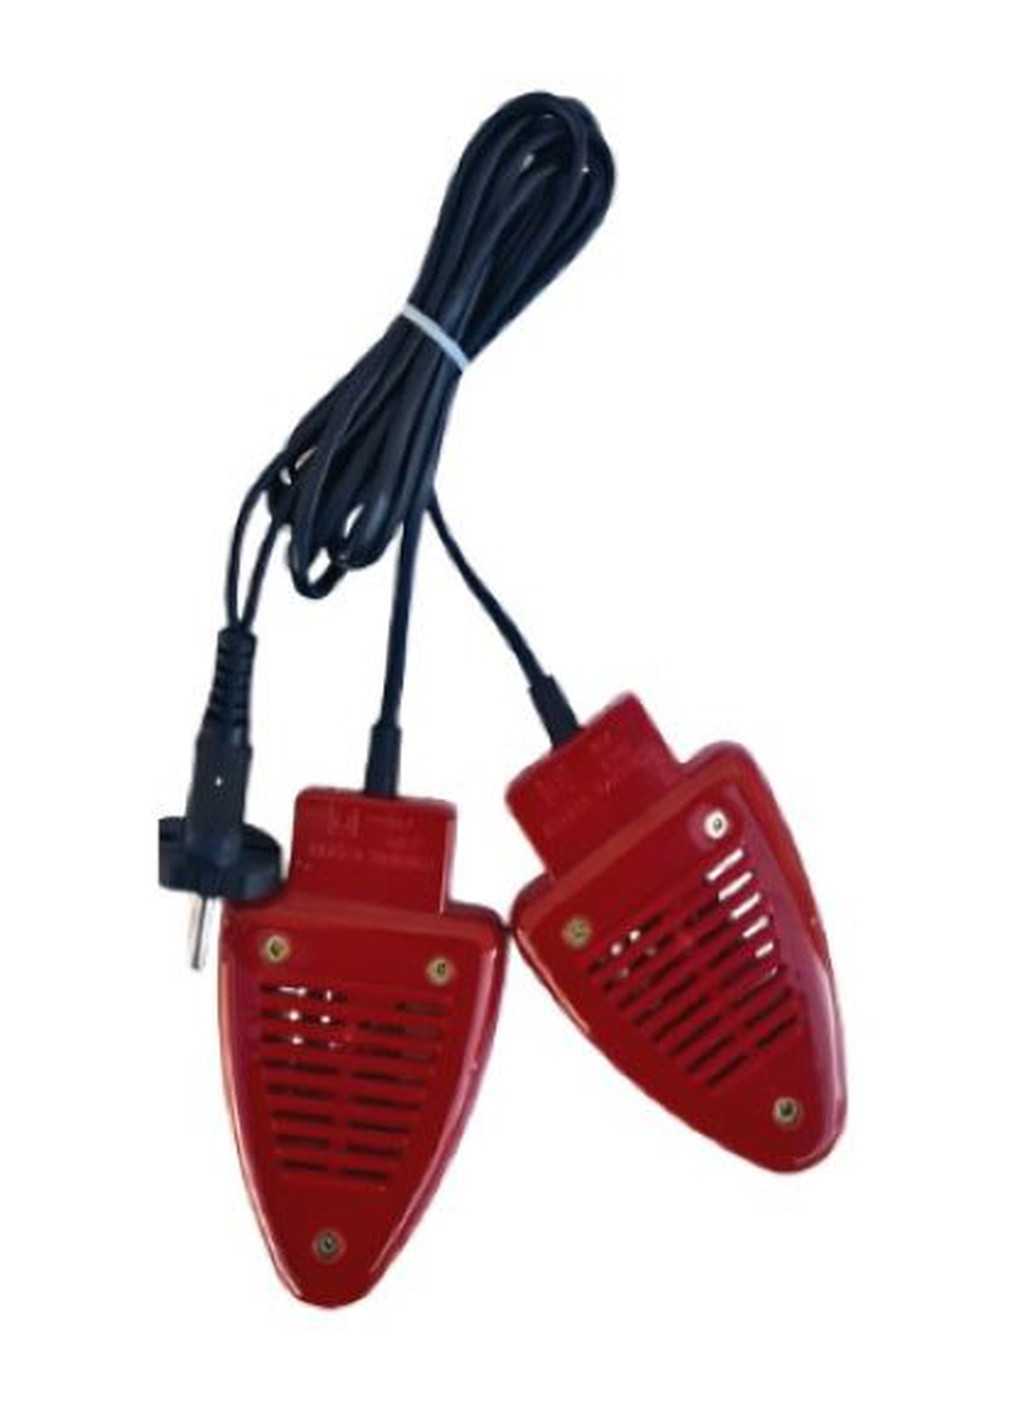 Електросушарка для взуття Універсальна червона КN-2034 Monocrystal (255340152)